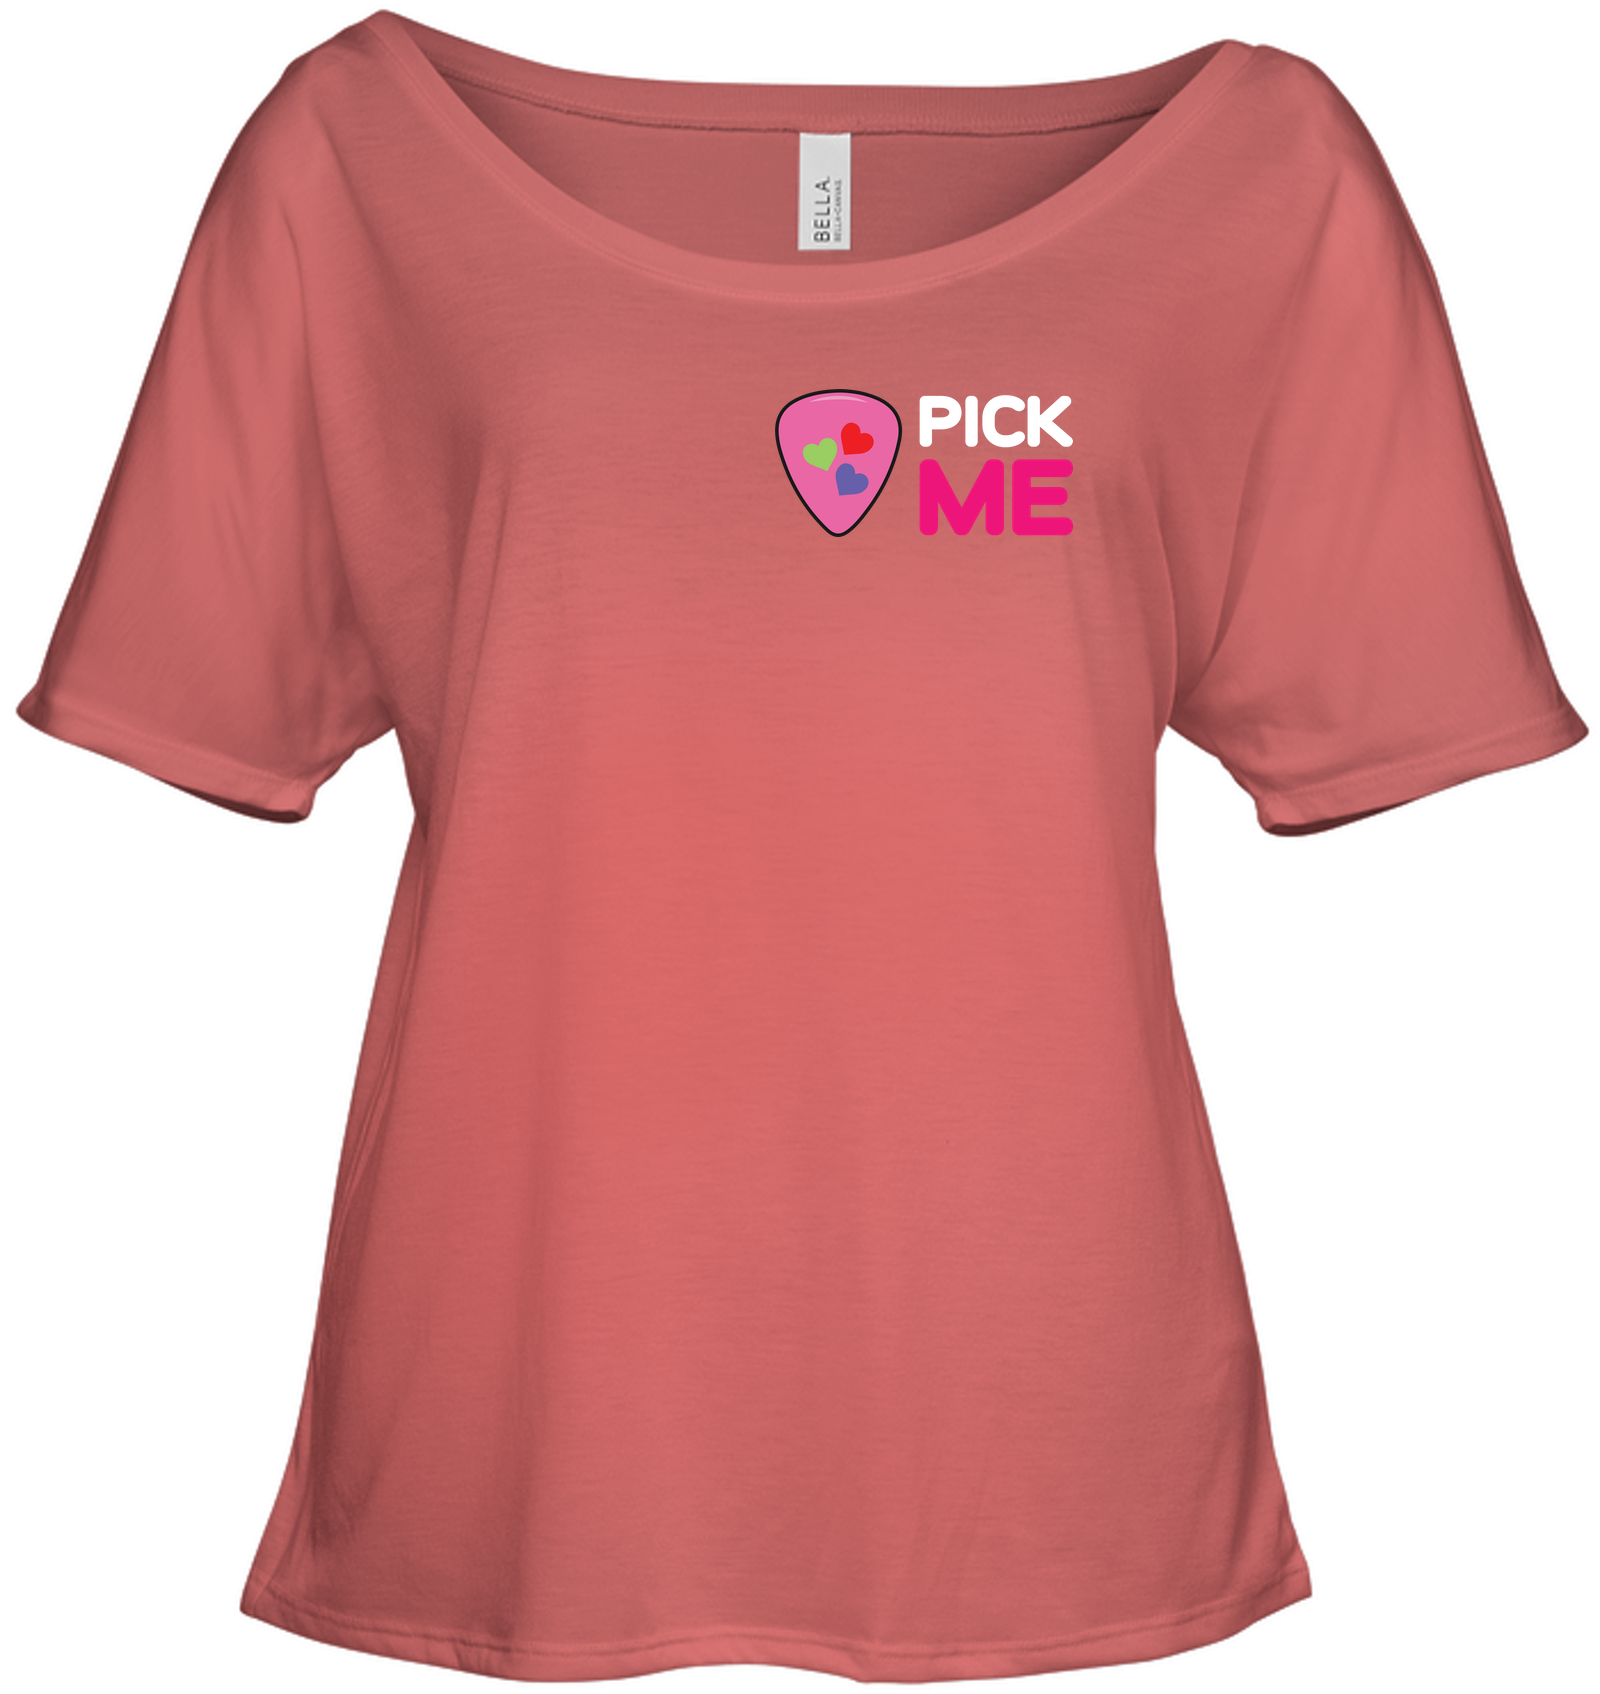 Pick Me (Pocket Size) - Bella + Canvas Women's Slouchy Tee